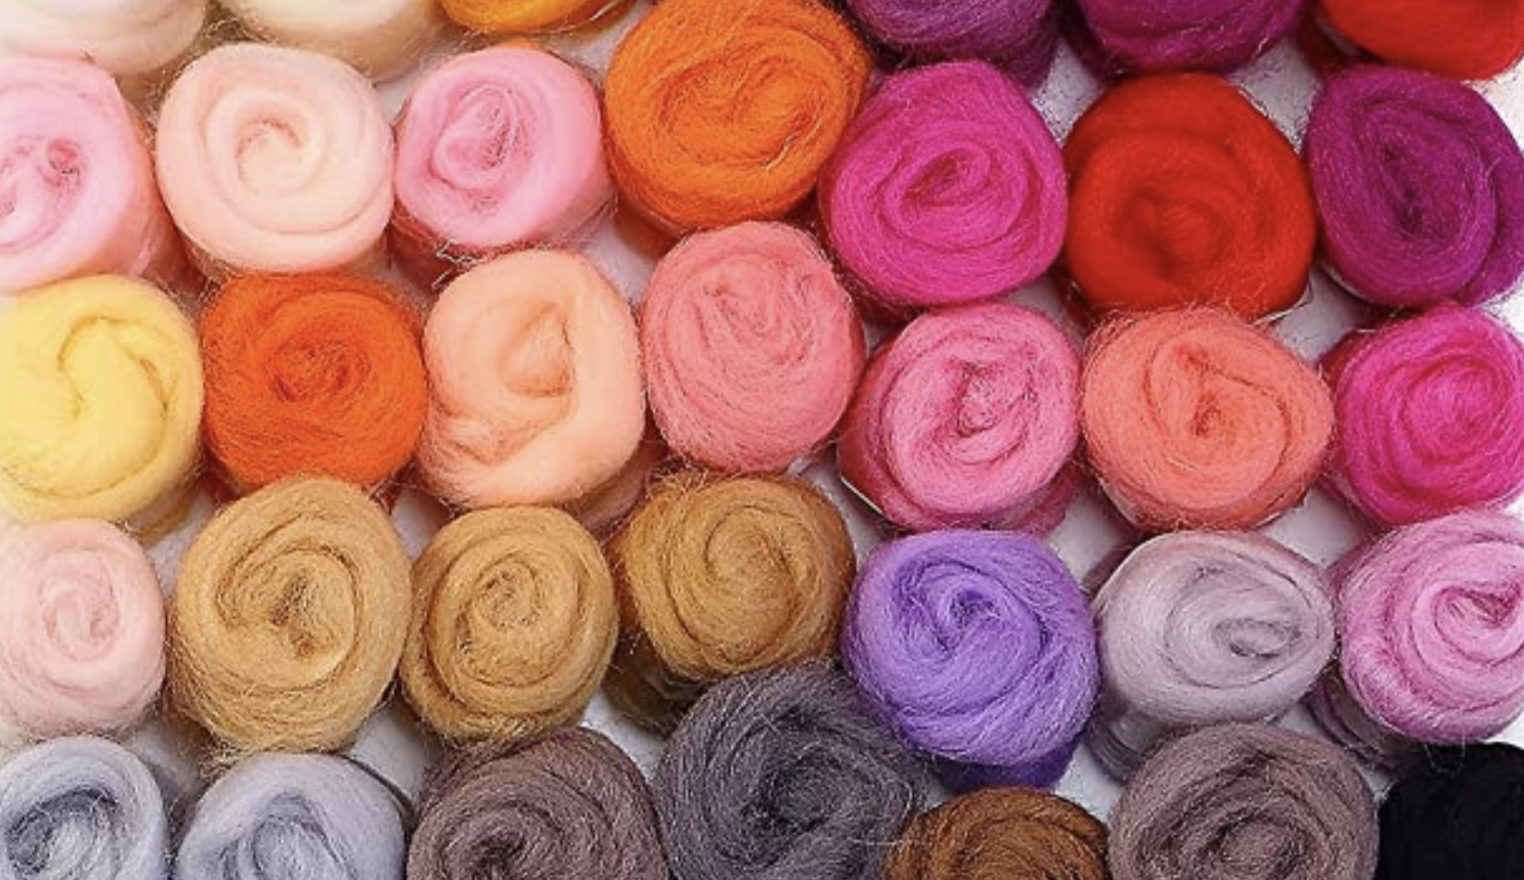 Woocrafts Large-Eye Blunt Needles Yarn Knitting Plus Crochet Hooks Set with Case